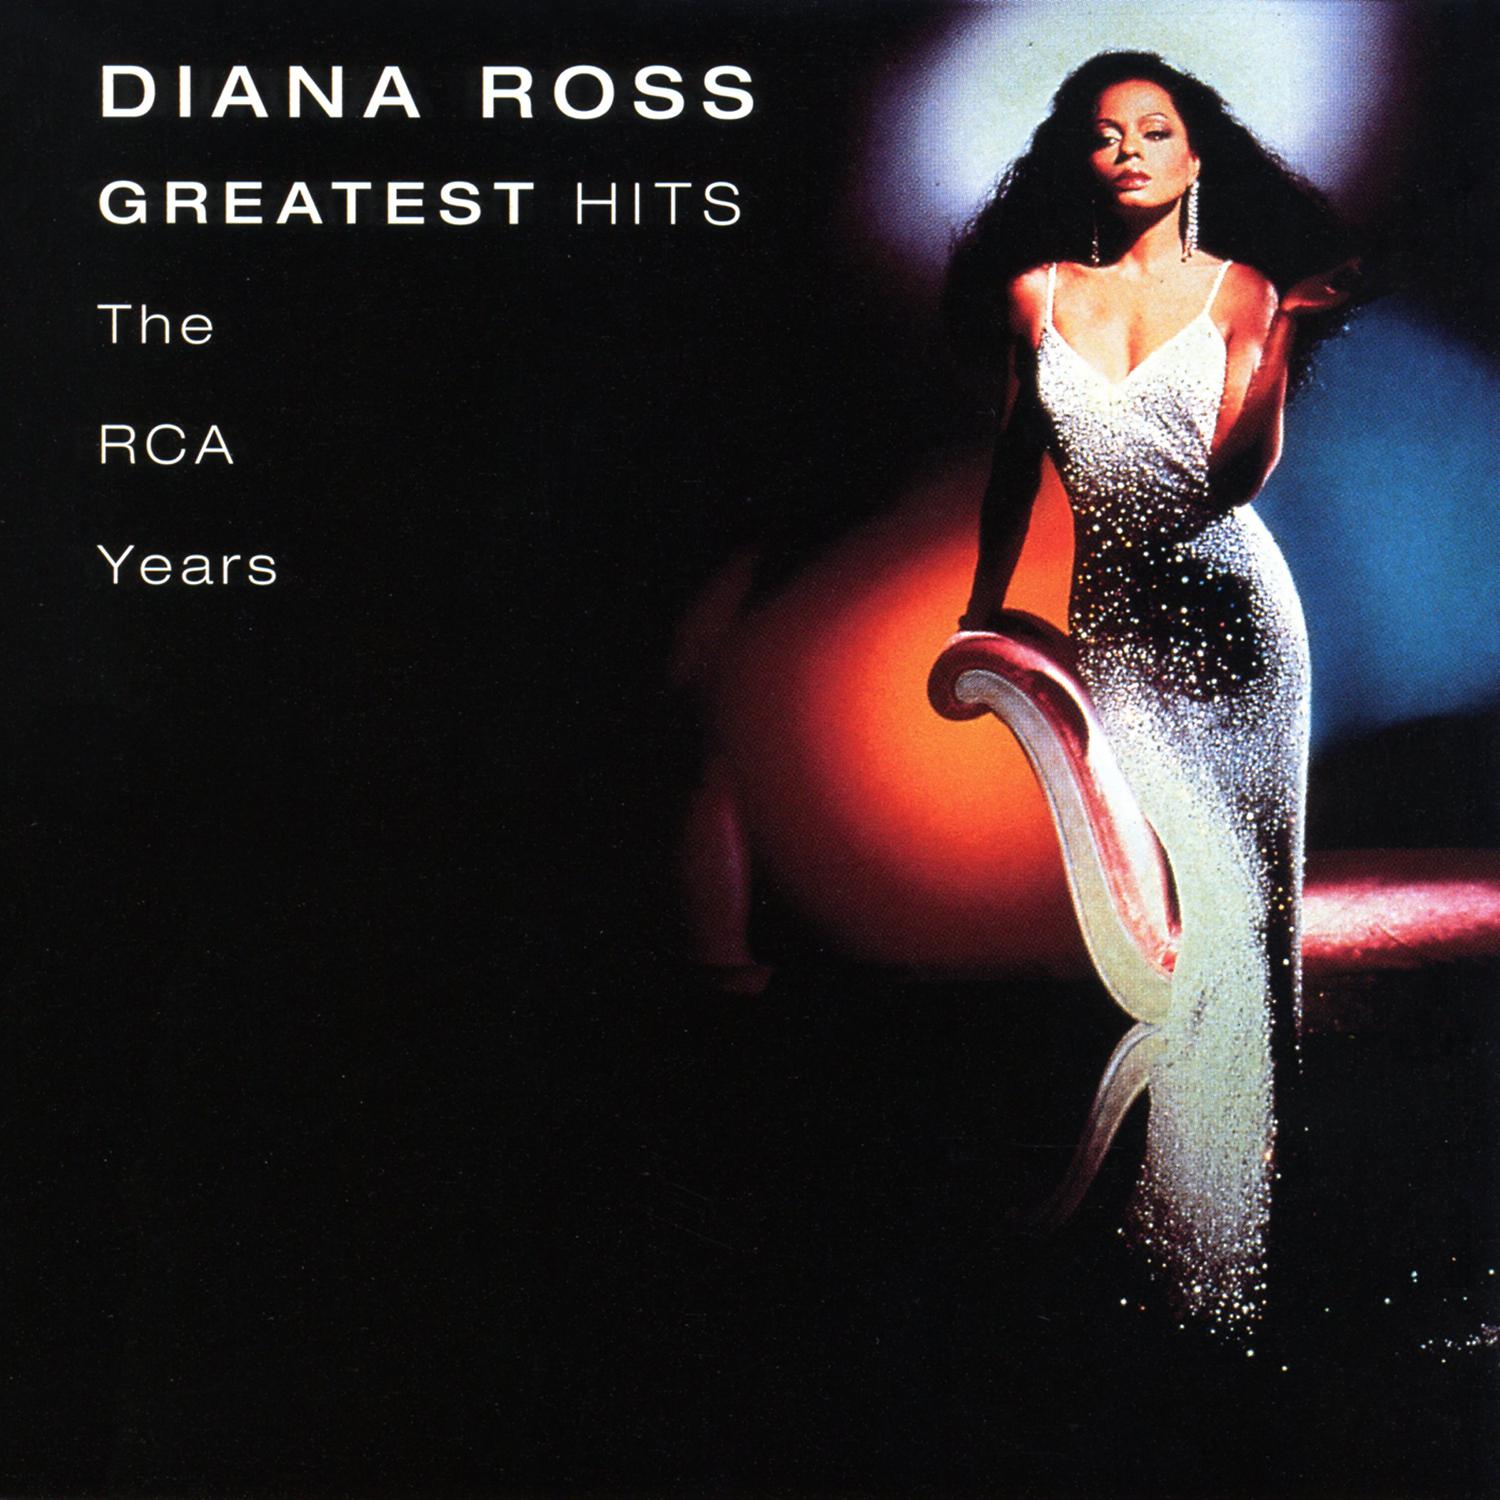 Diana Ross – Greatest Hits: The RCA Years (1997/2015) [HDTracks FLAC 24bit/96kHz]